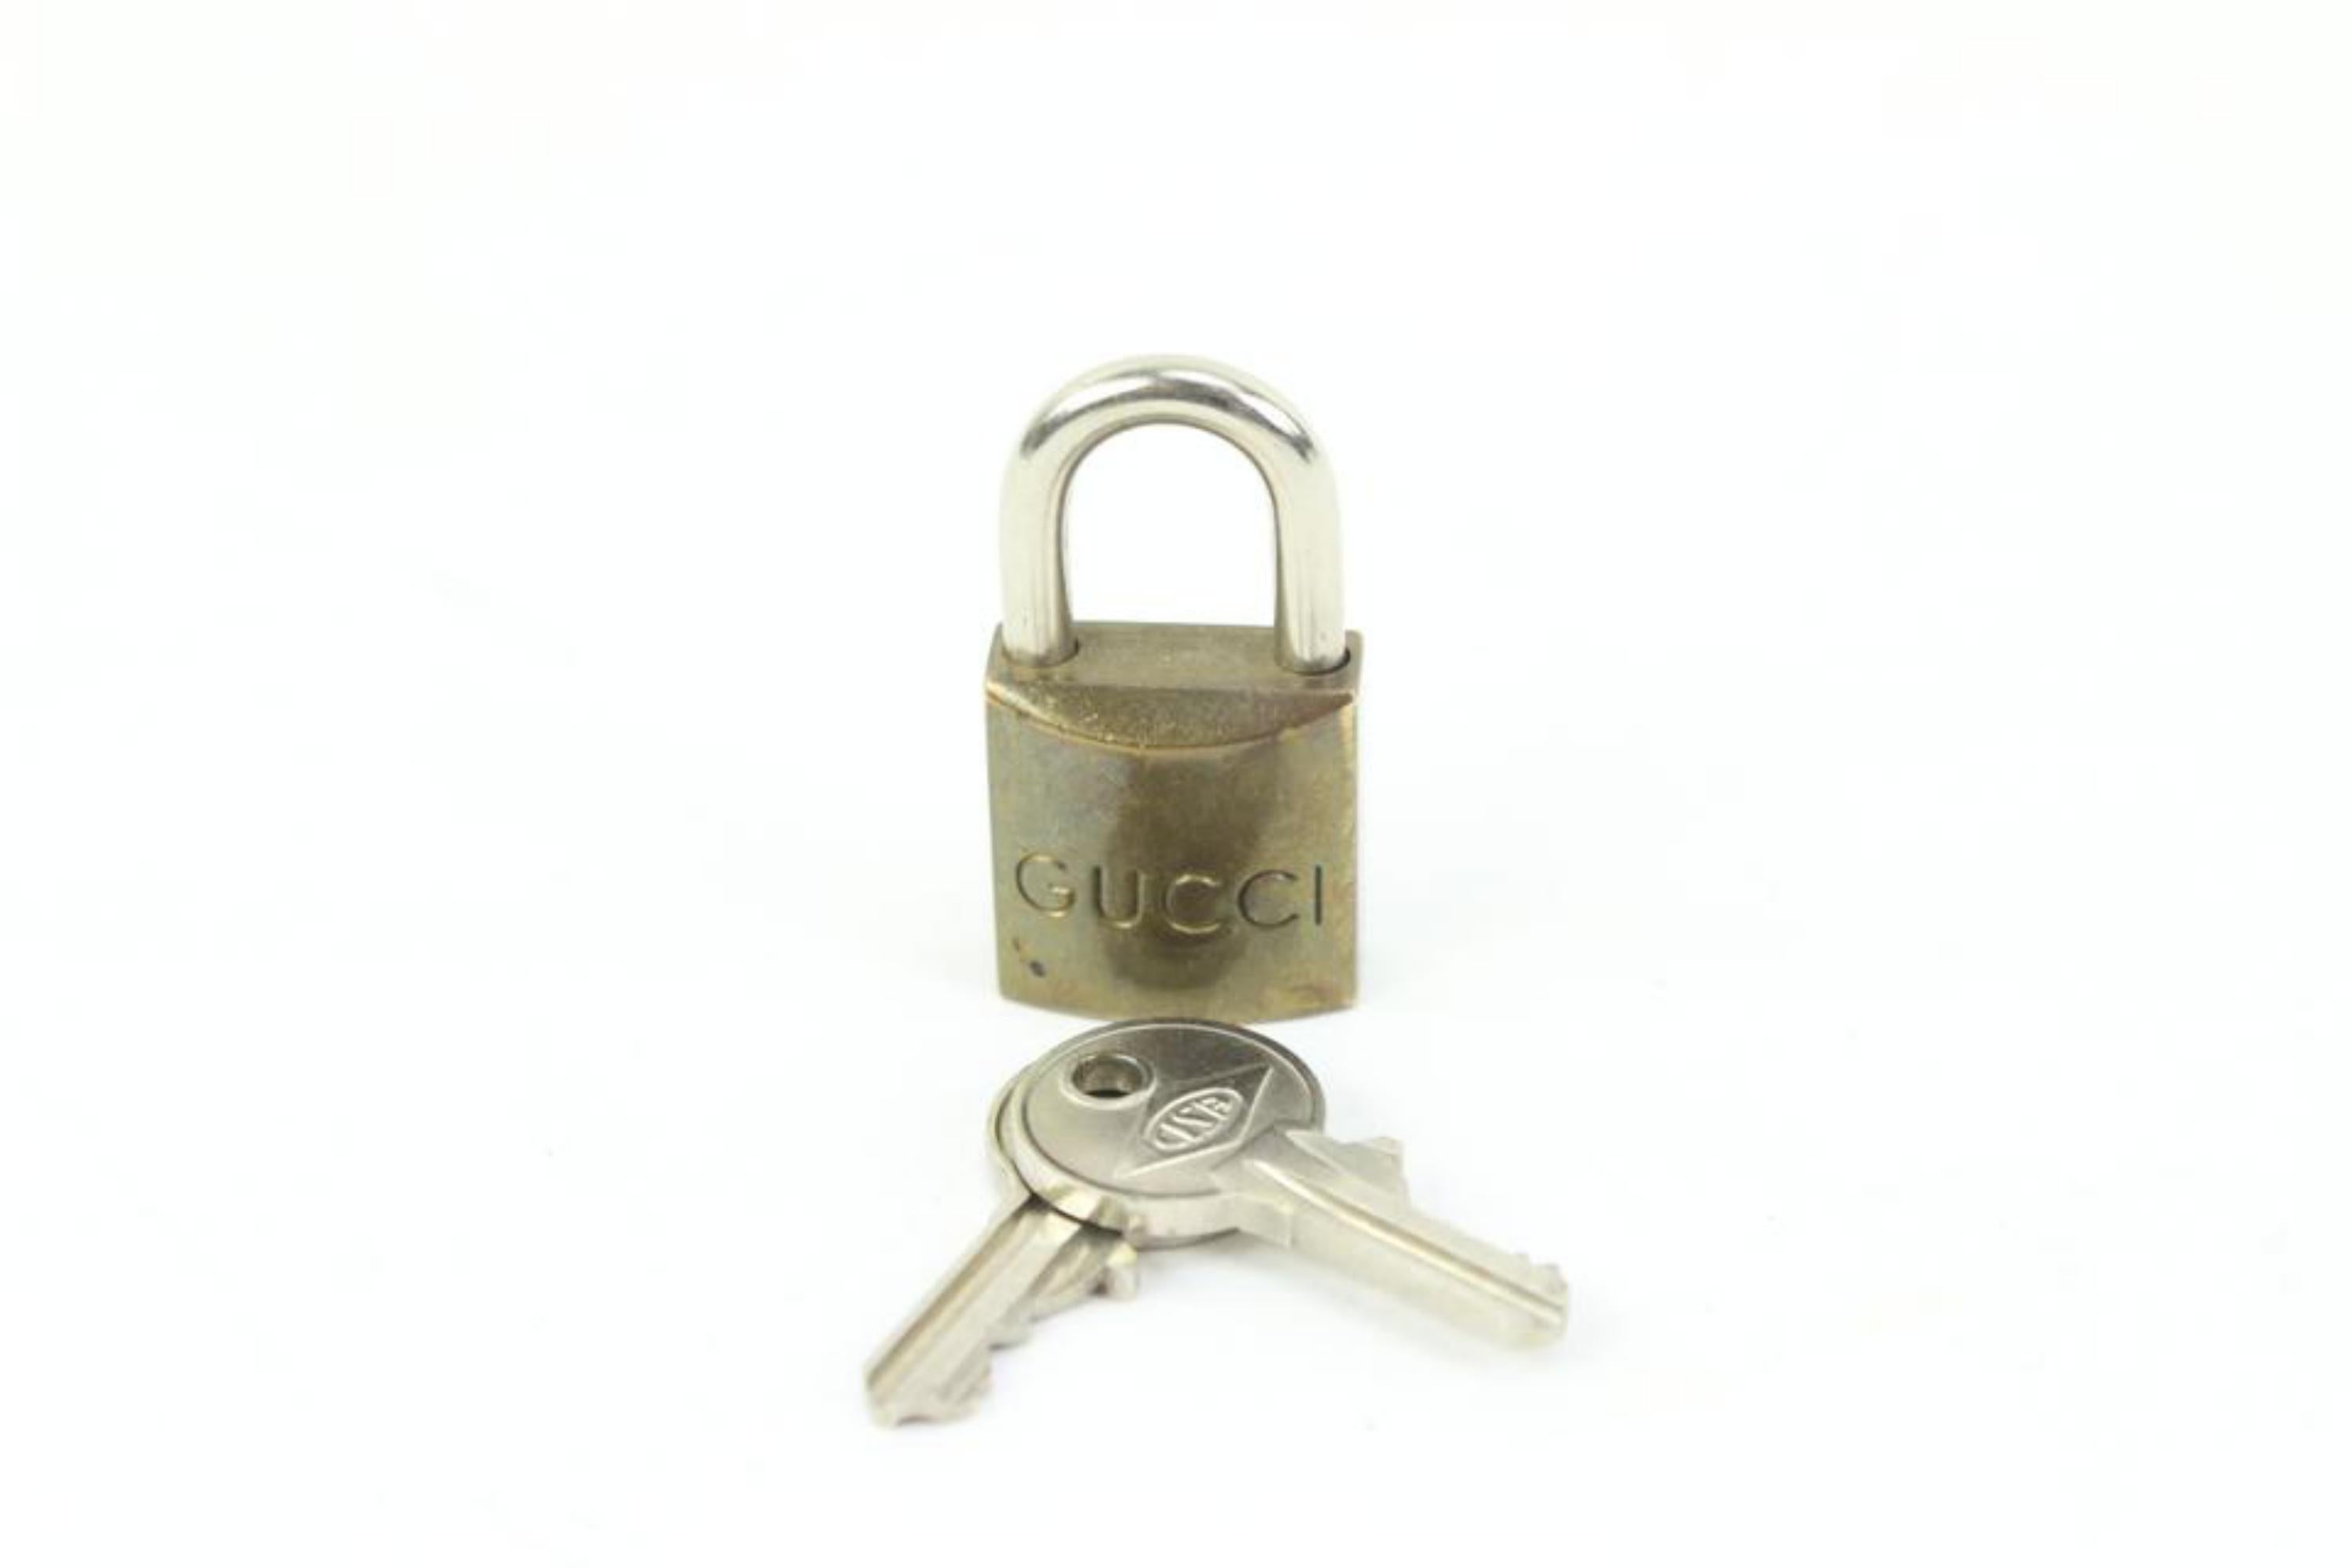 Gucci Brace G Logo Lock and Key Set Cadena Bag Charm Padlock 69g315s 4